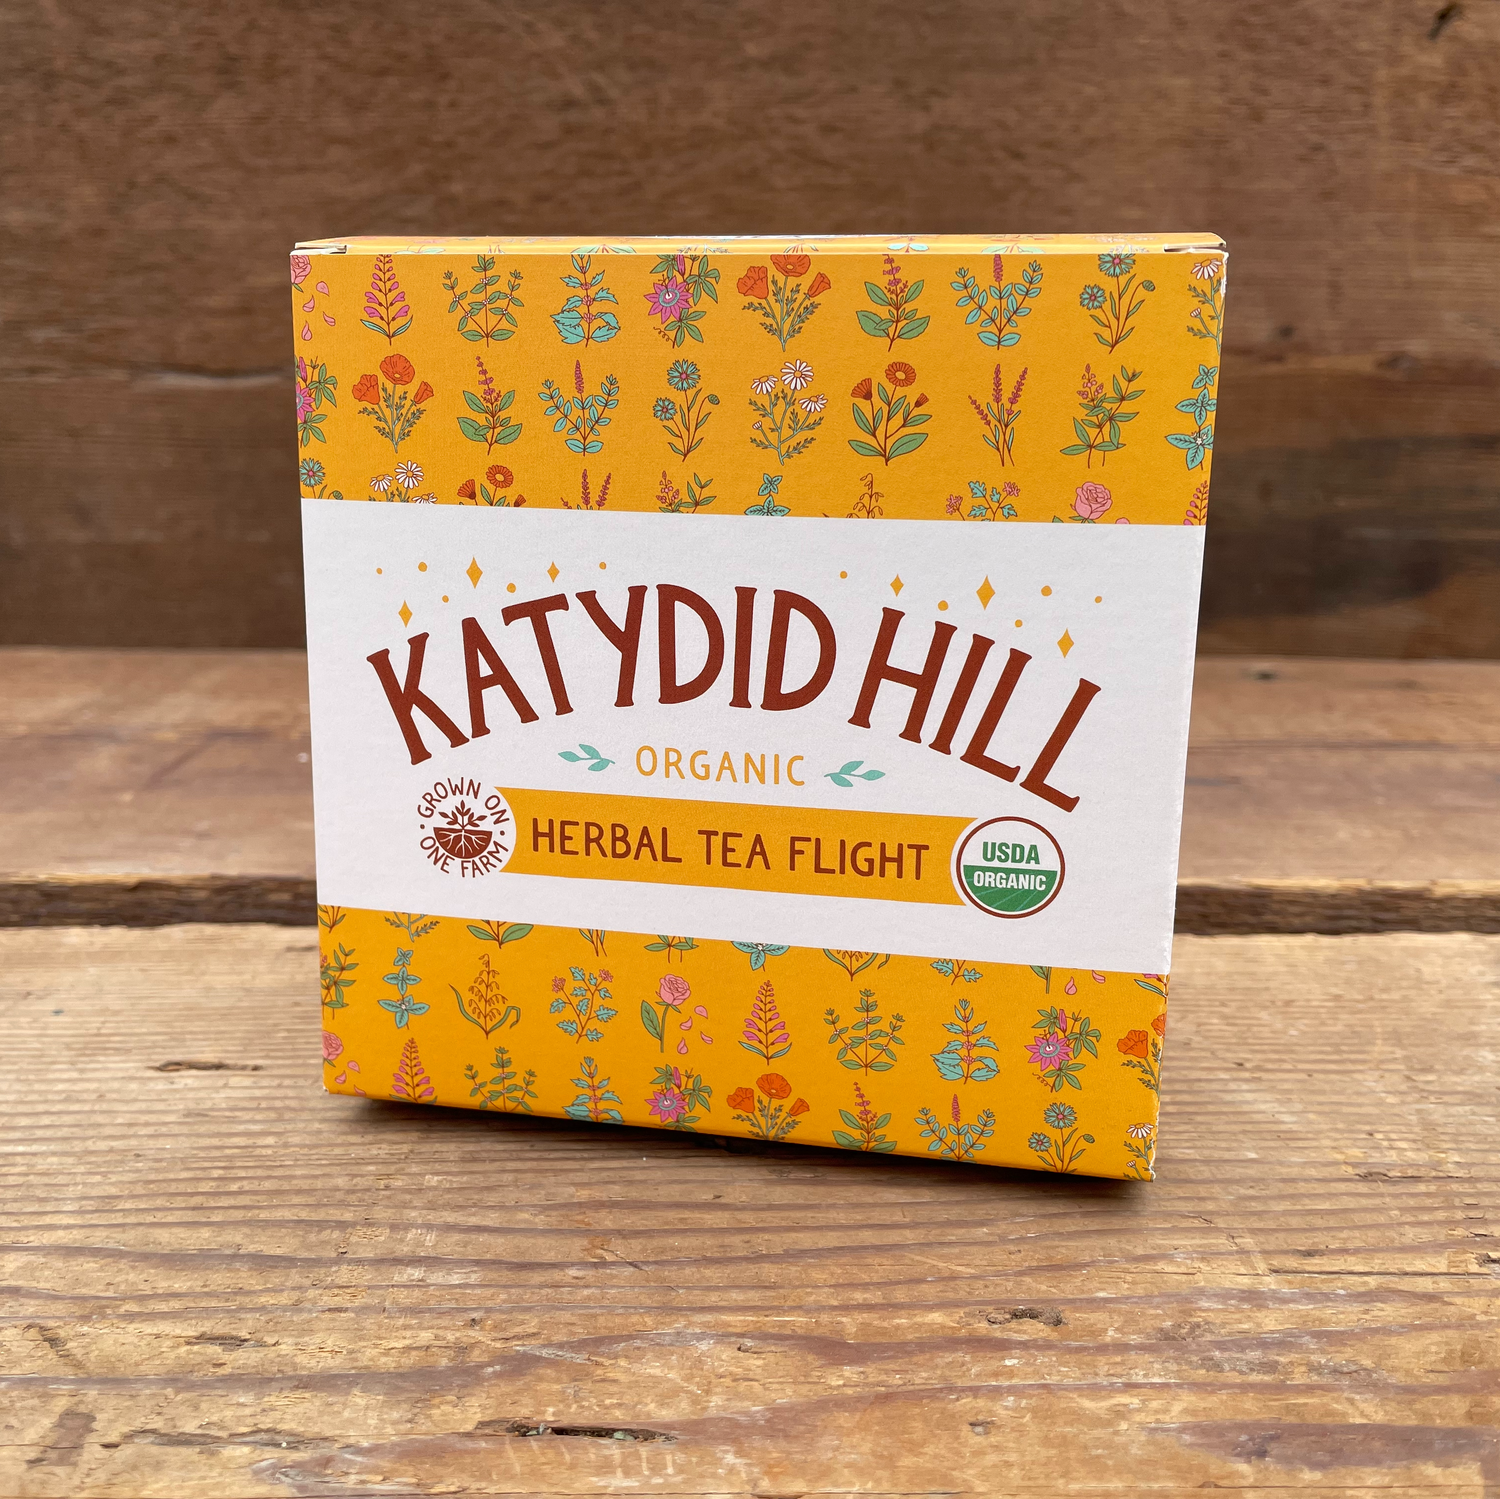 Katydid Hill Herbal Tea Flight